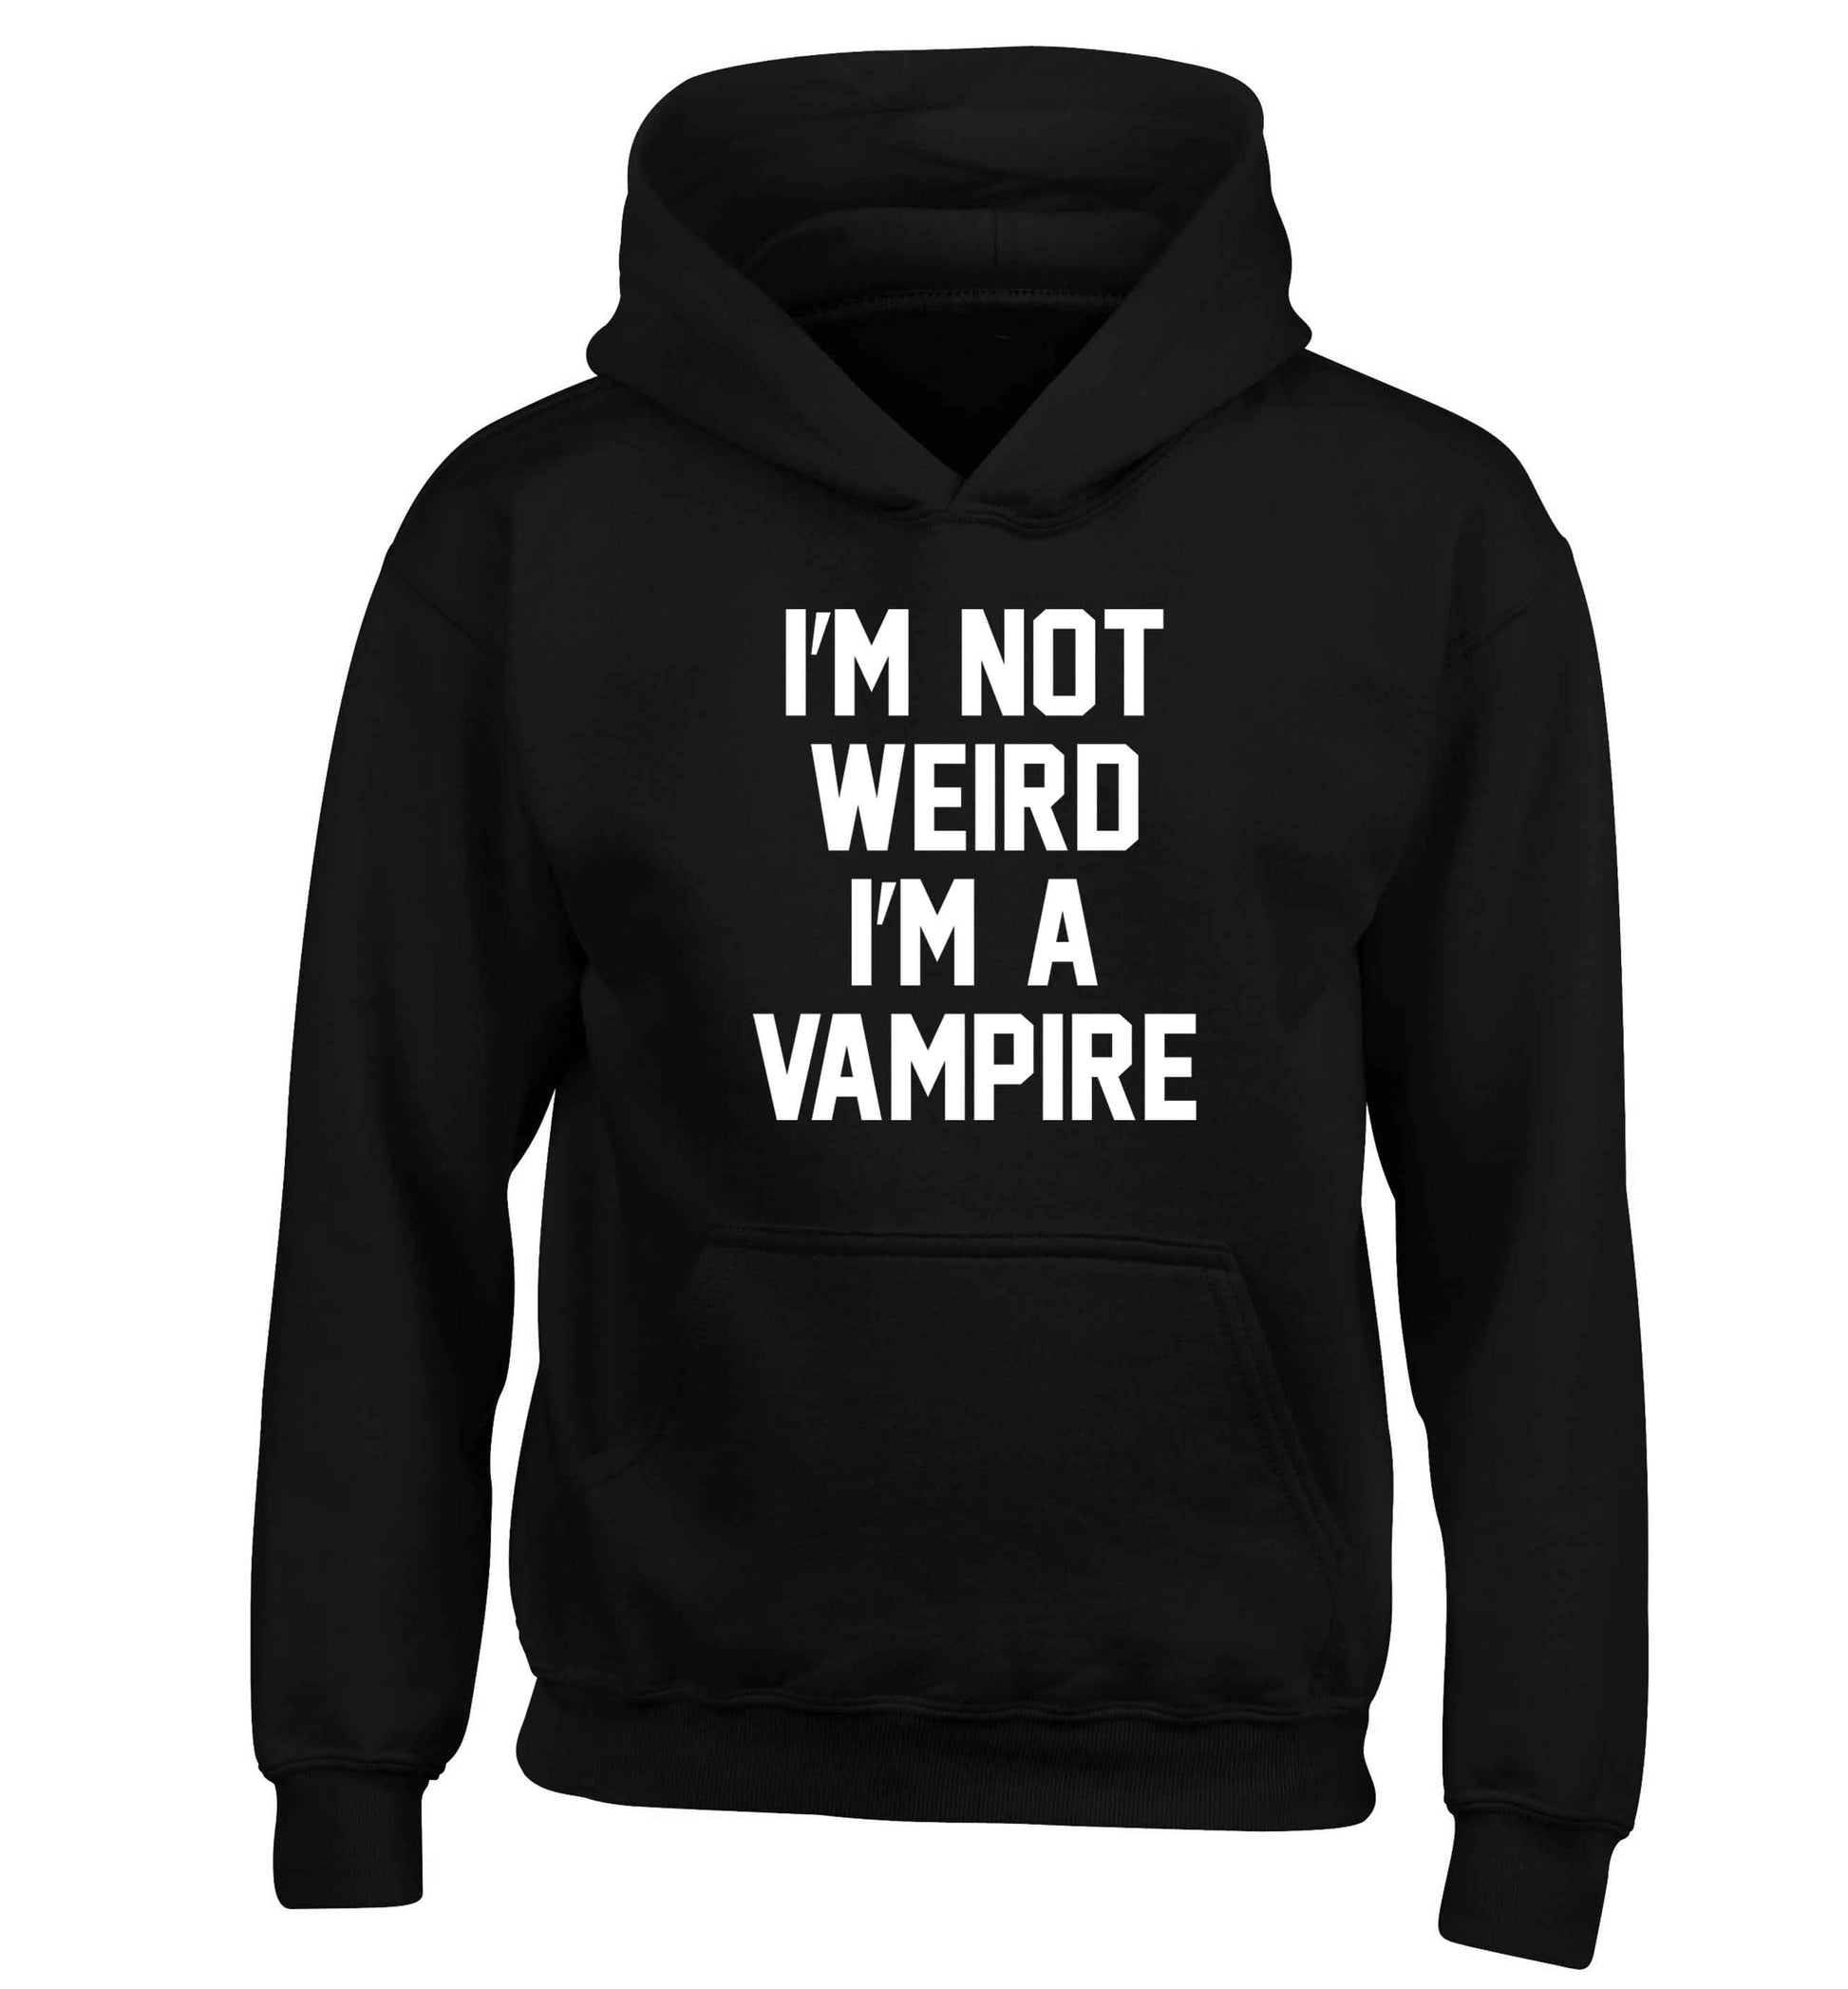 I'm not weird I'm a vampire children's black hoodie 12-13 Years